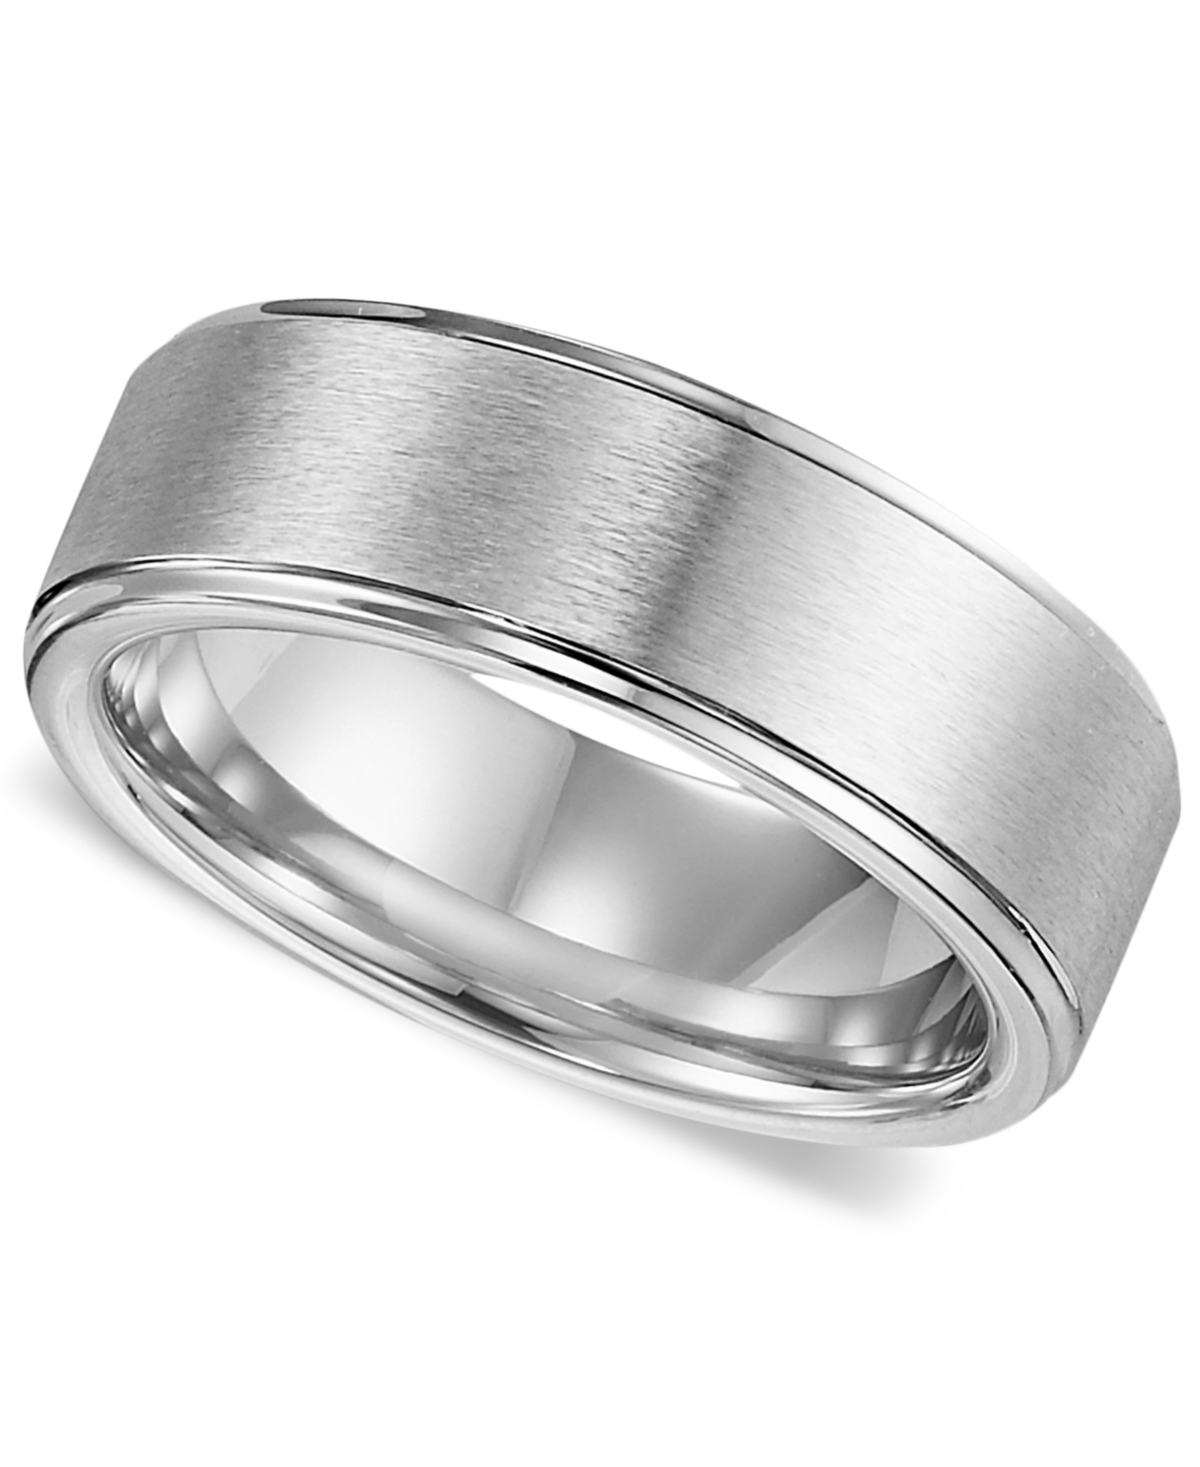 Men's Cobalt Ring, Comfort Fit Wedding Band - Cobalt